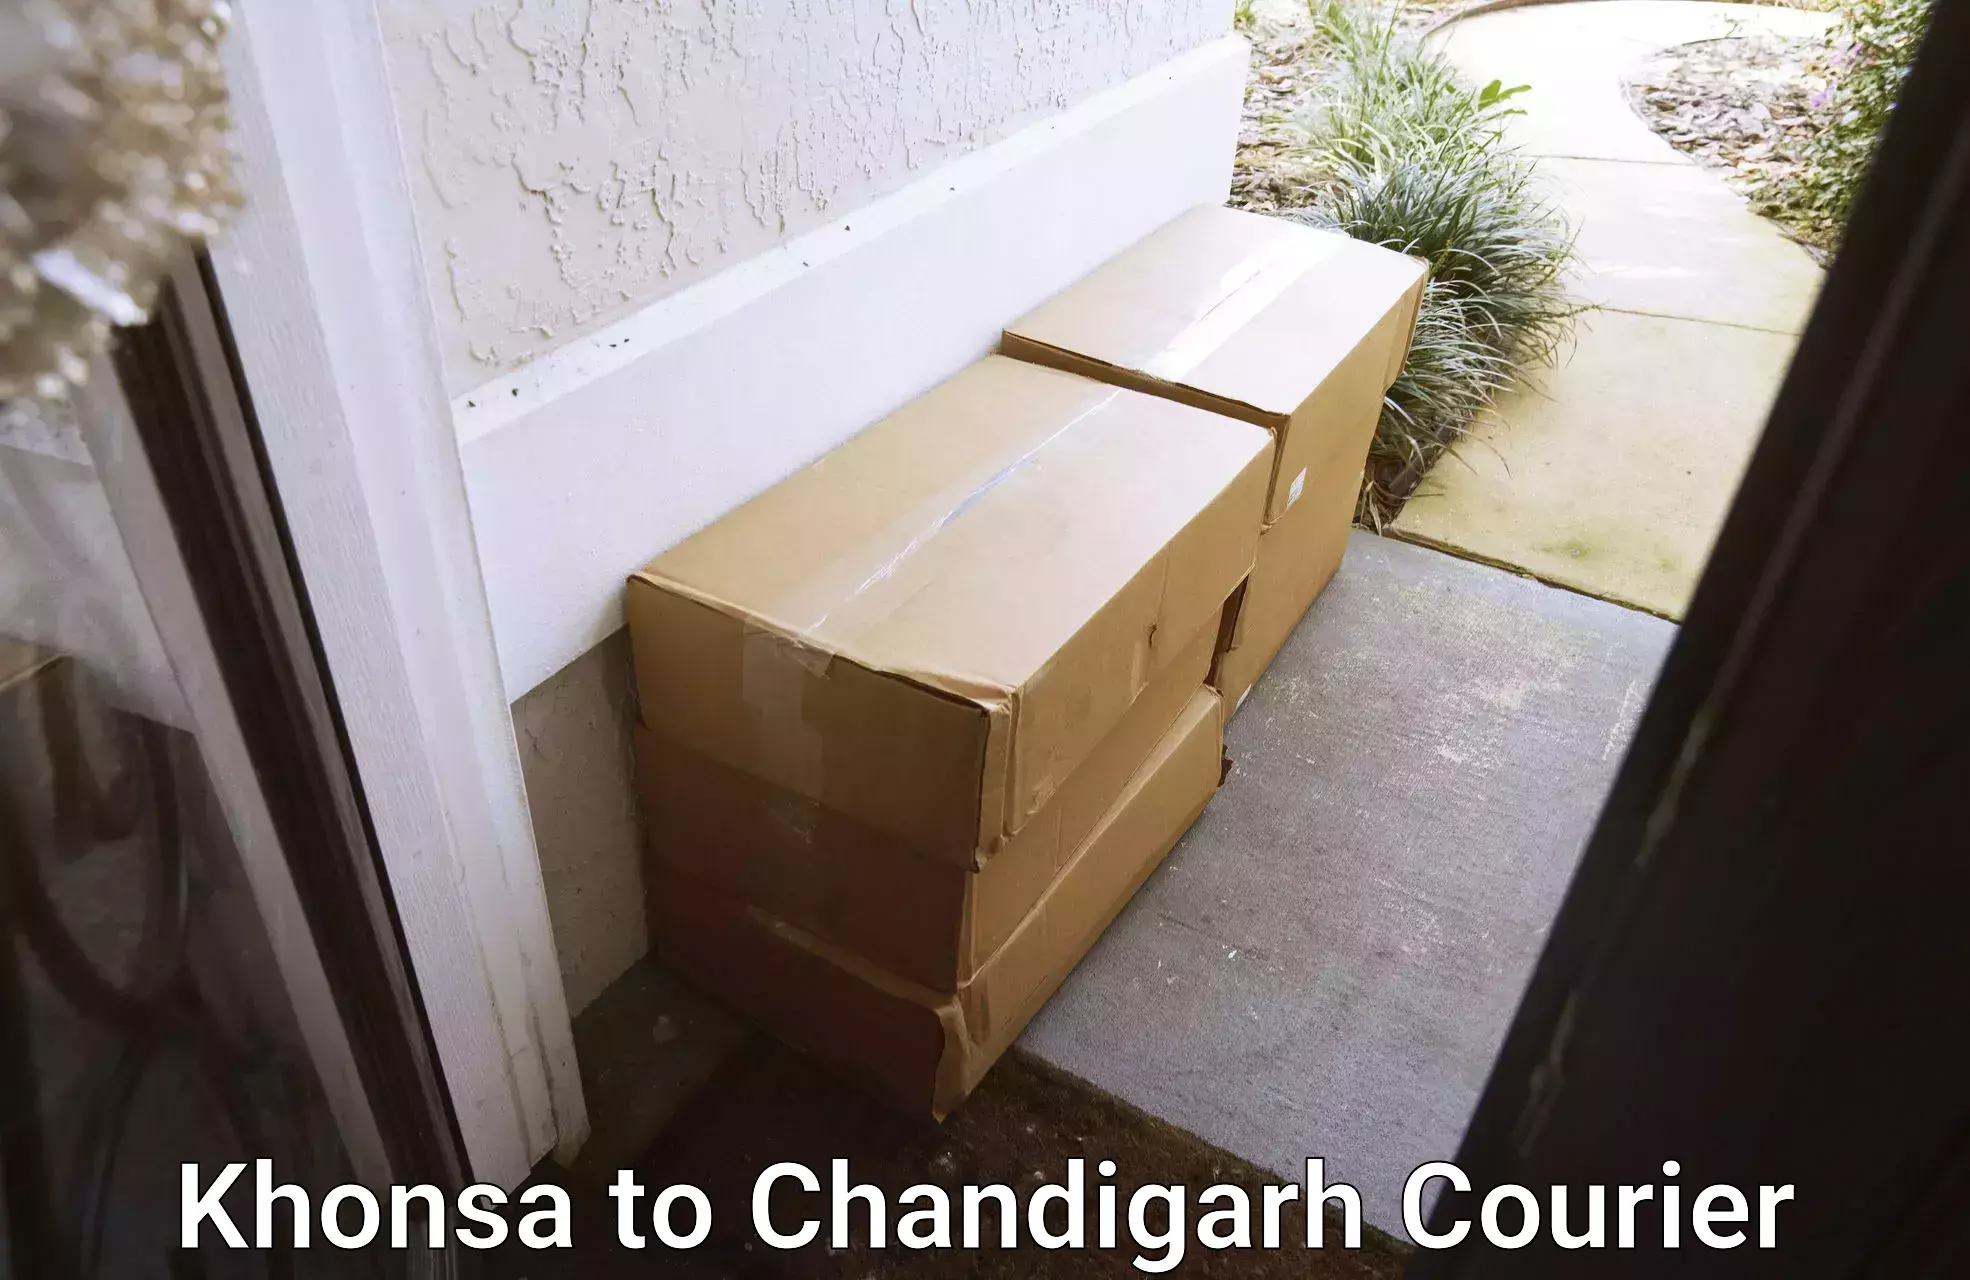 Global shipping networks Khonsa to Chandigarh